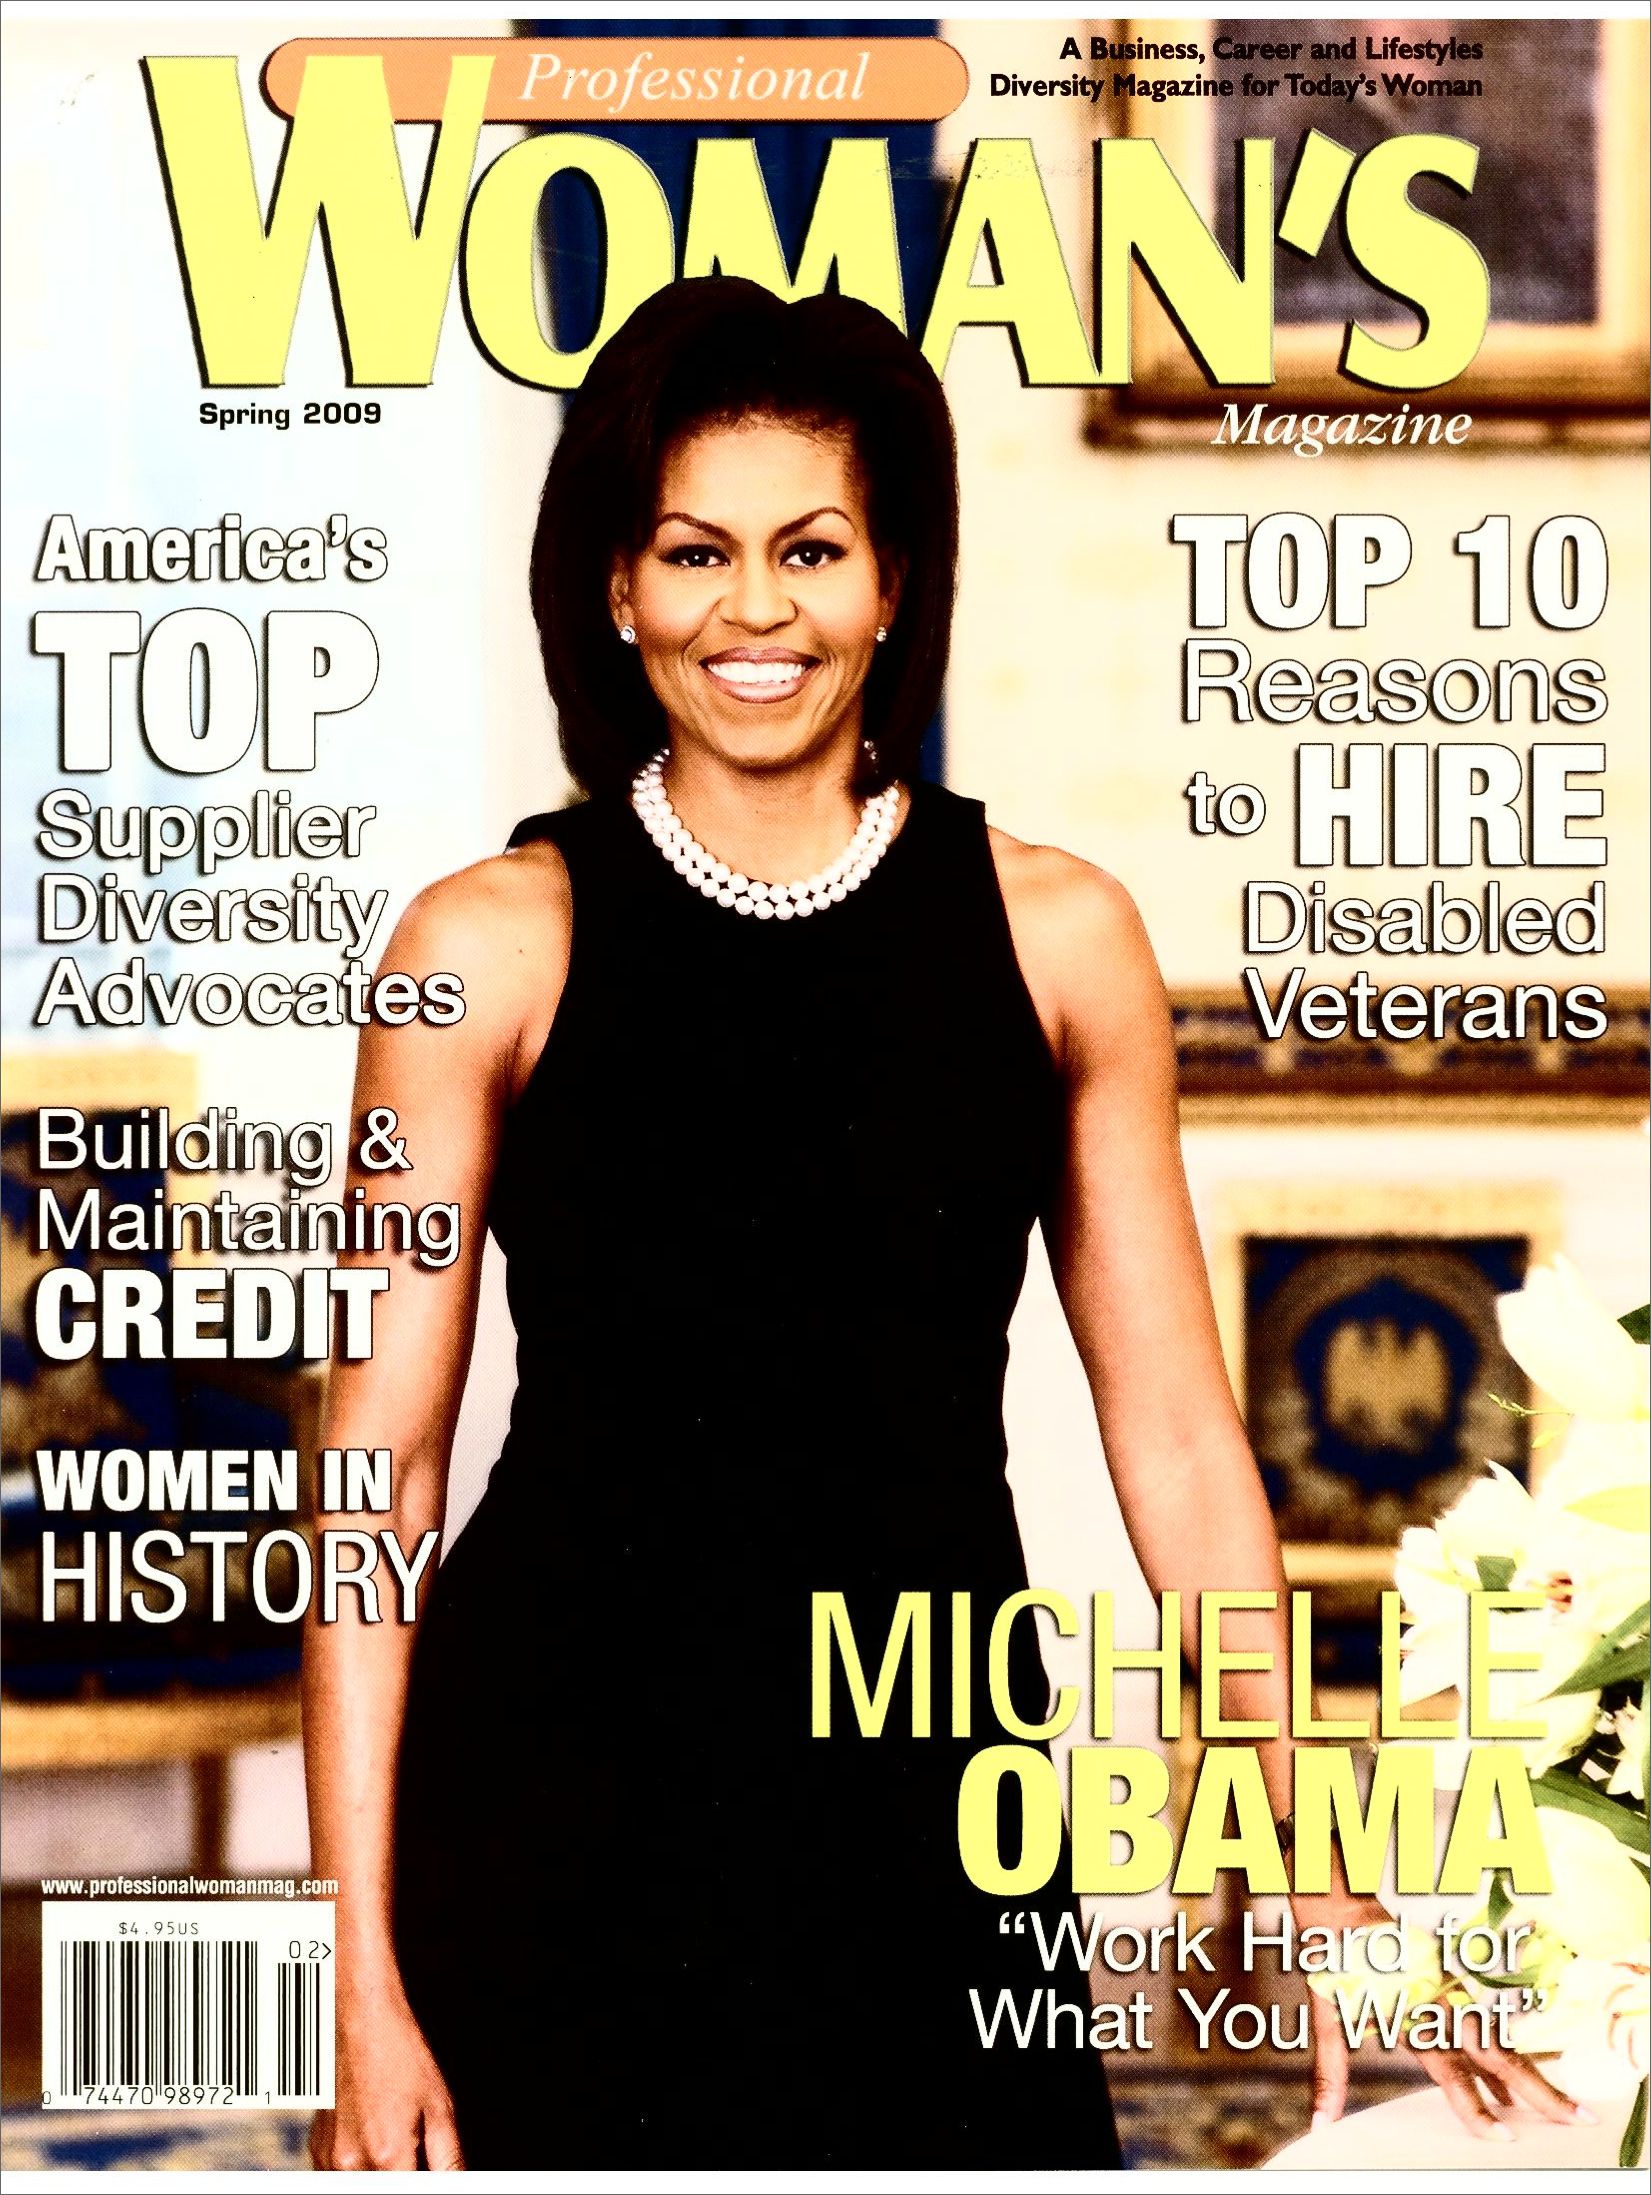 Professional WOMAN'S Magazine